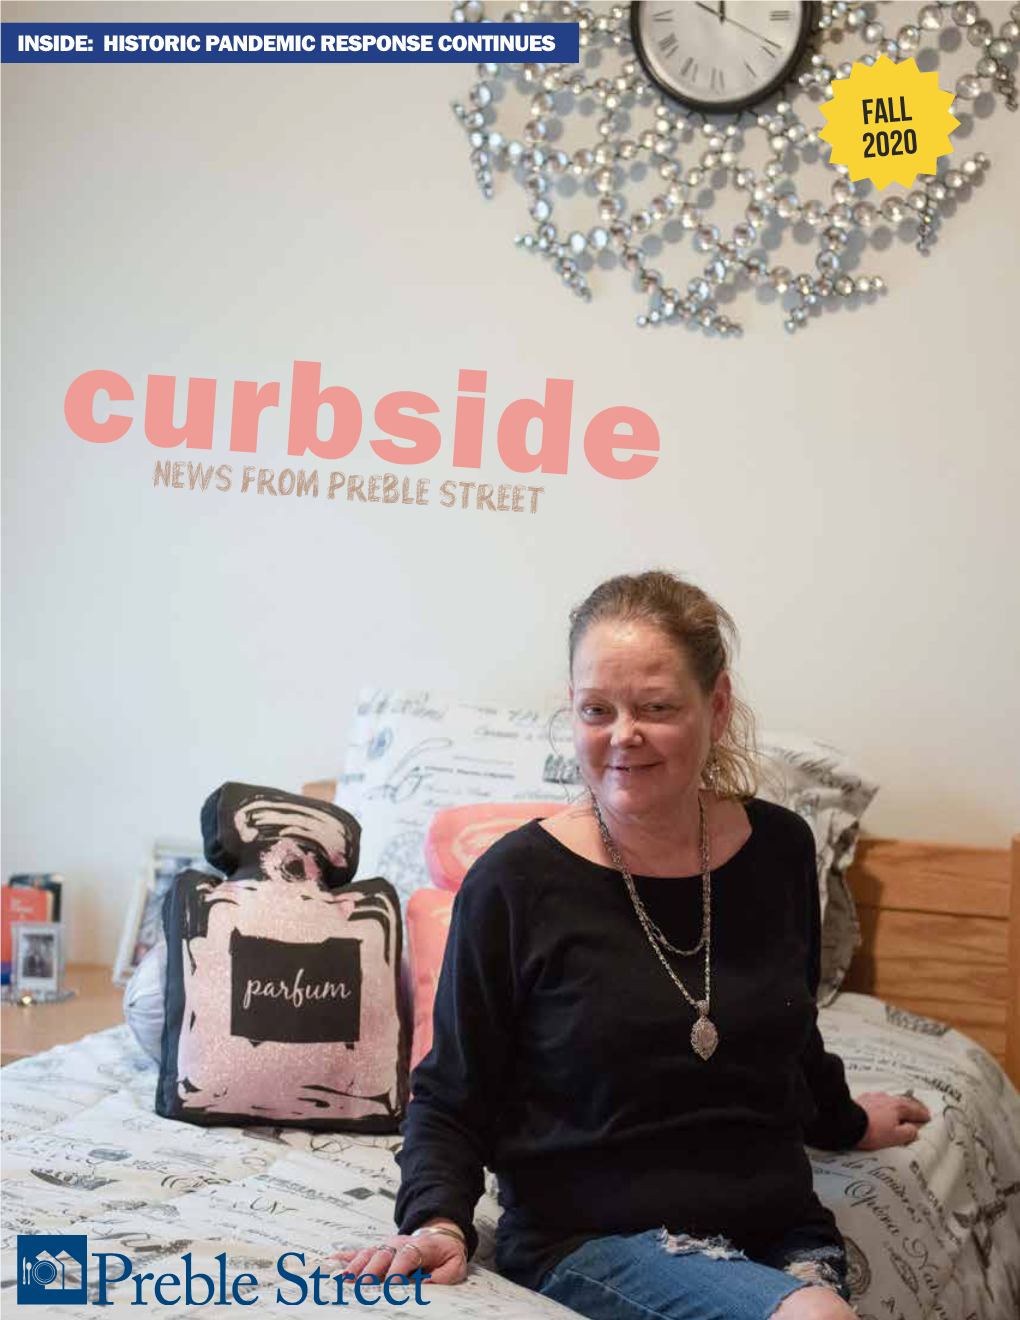 Curbside: News from Preble Street Fall 2020